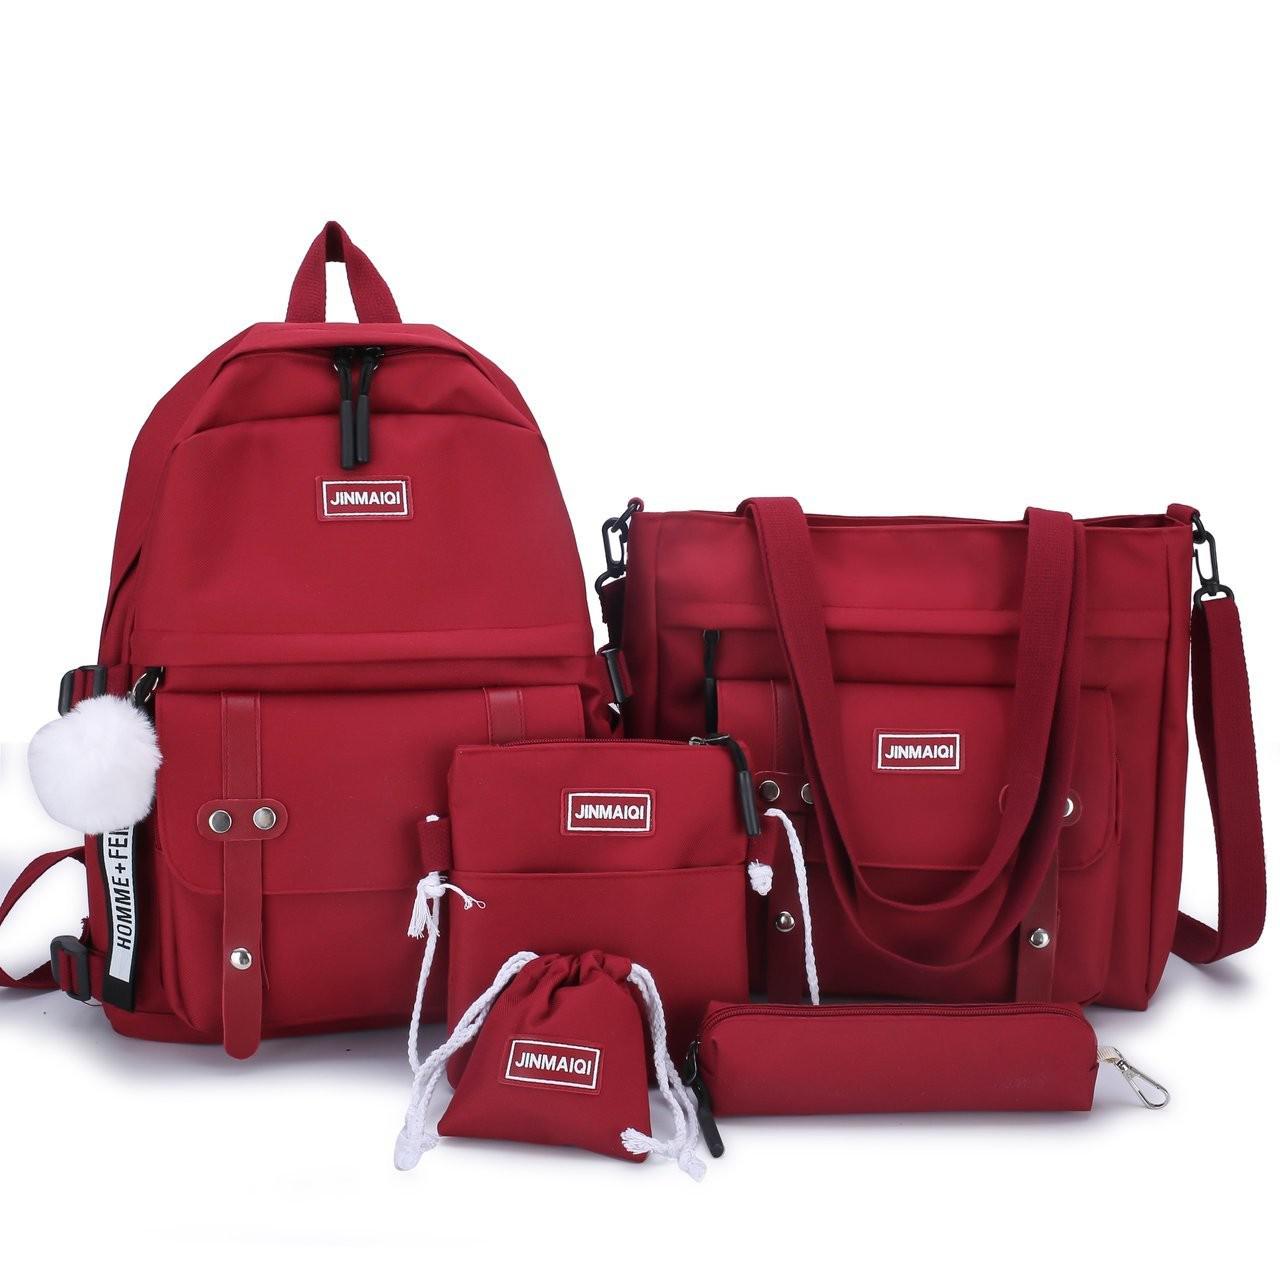 Wenkouban 5 pcs sets canvas Schoolbags For Teenage Girls Women Backpacks Laptop keychain School Bags Travel Bagpack Mochila Escolar